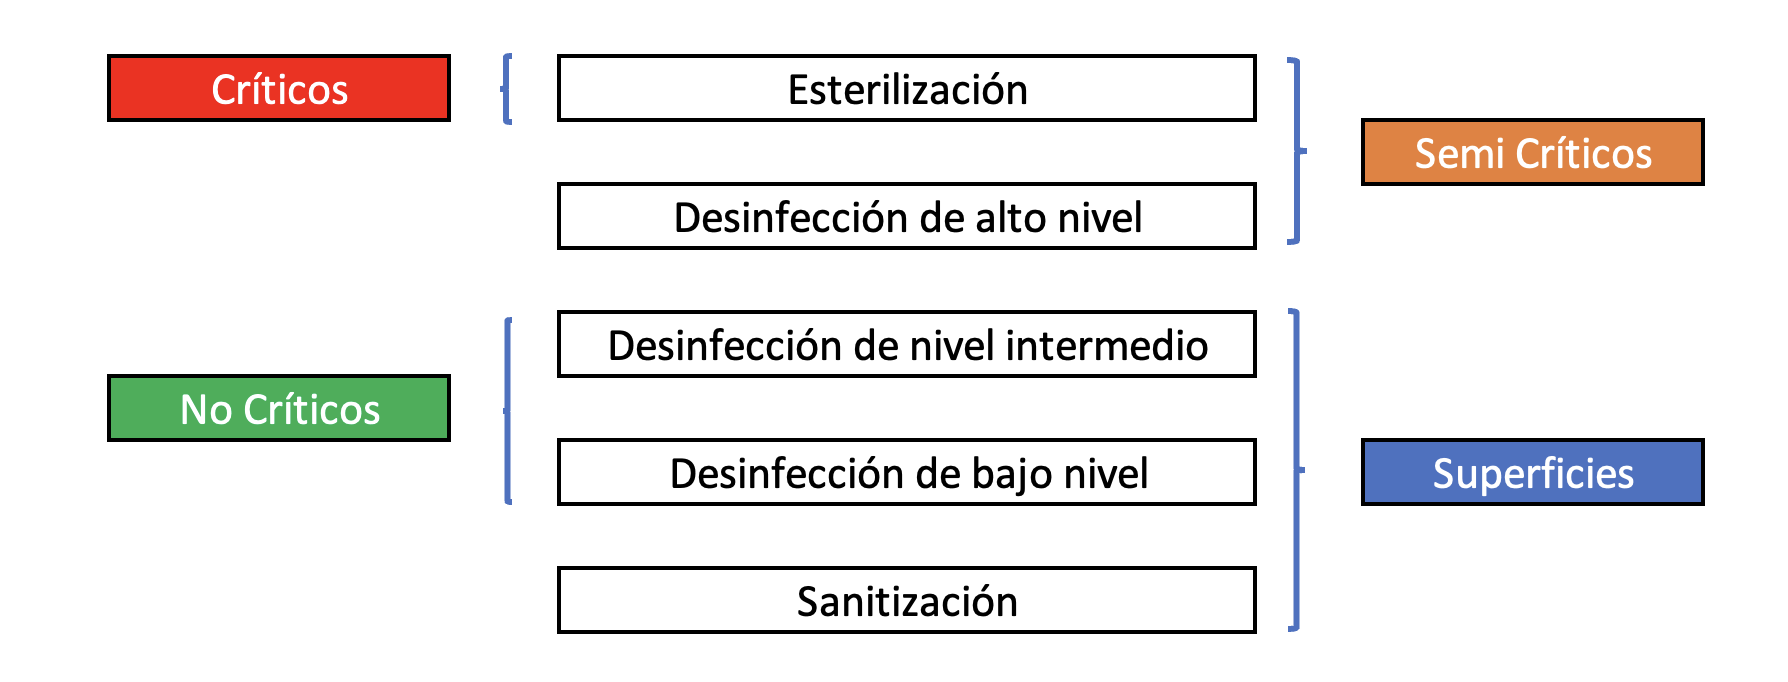 Elección de un método de esterilización o desinfección